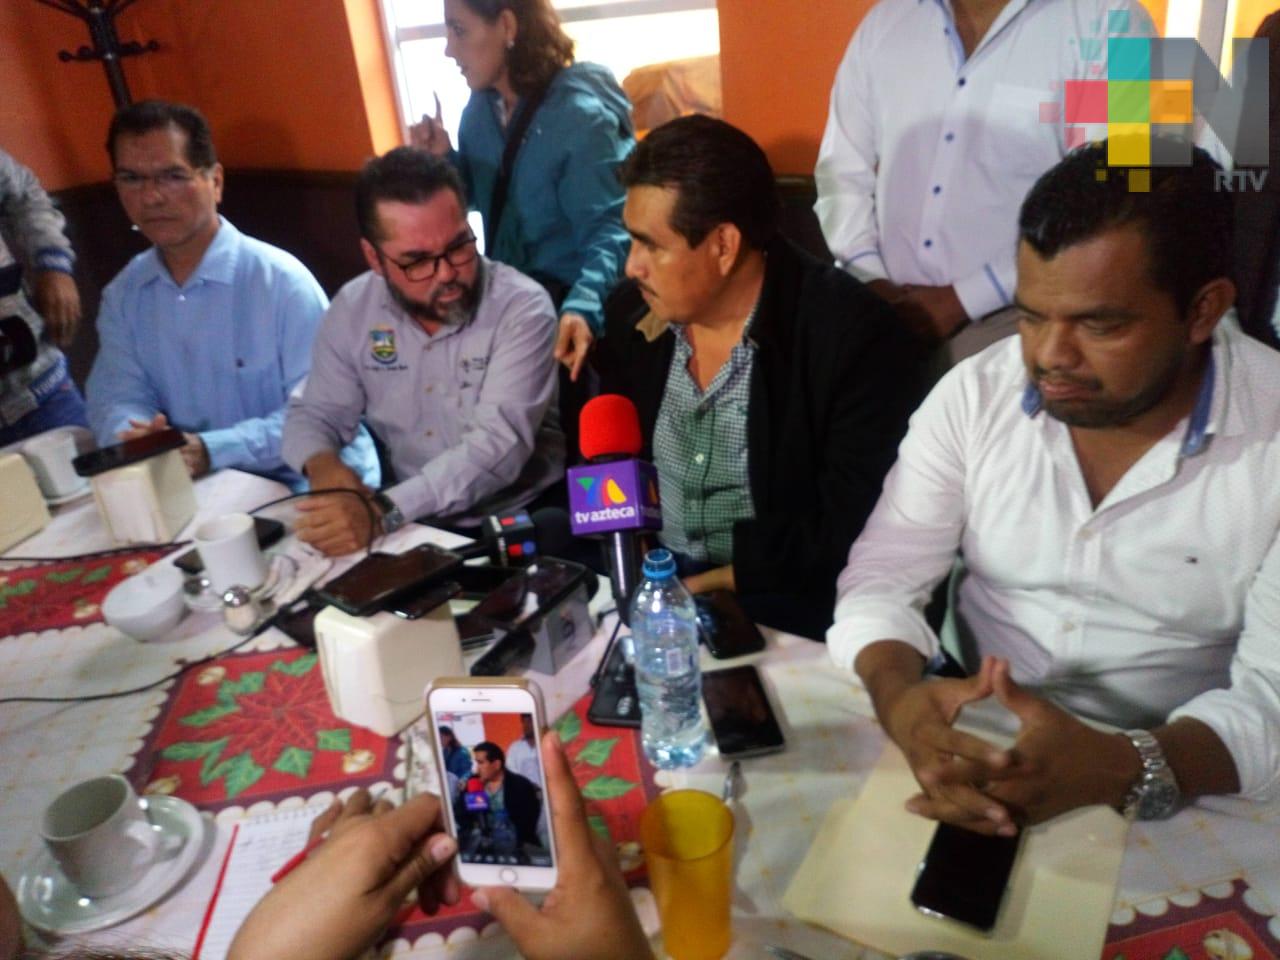 Alcaldes del sur de Veracruz exigen renuncia del fiscal de Veracruz